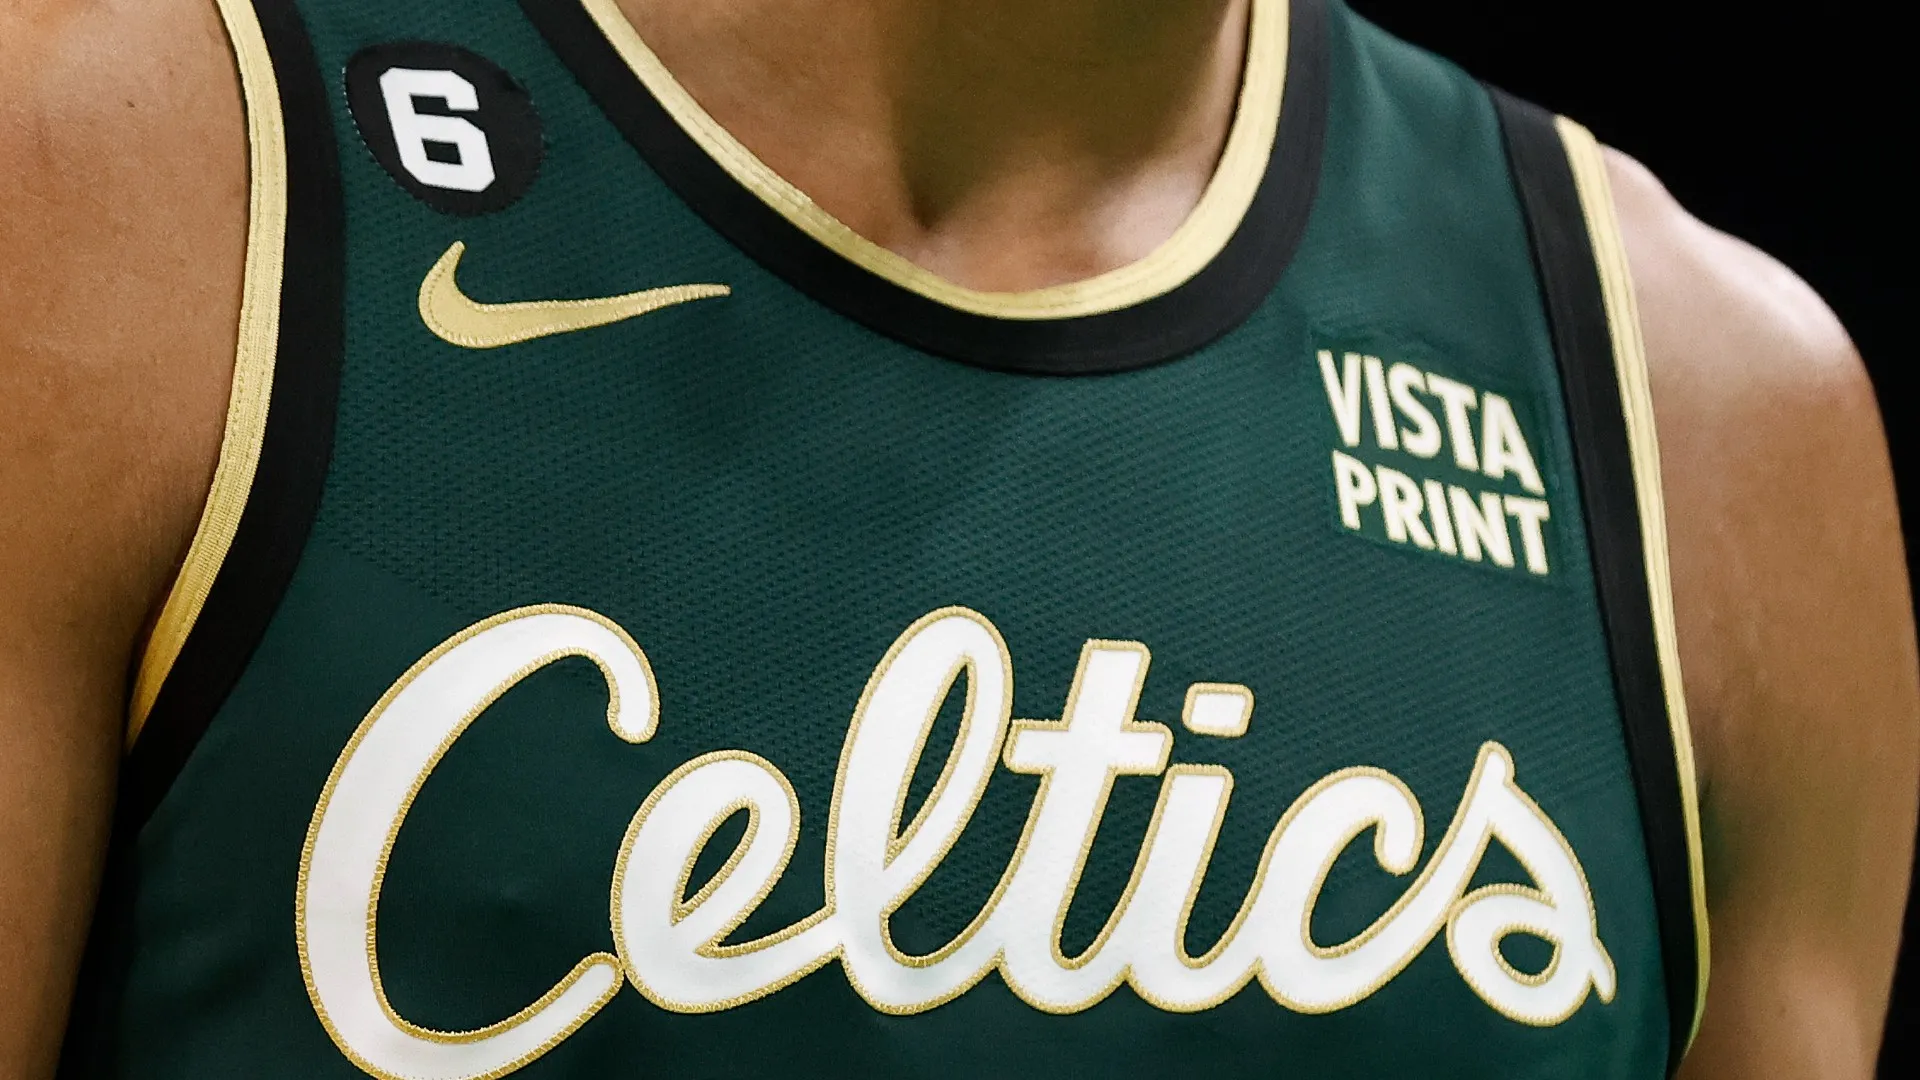 boston celtics authentic jerseys